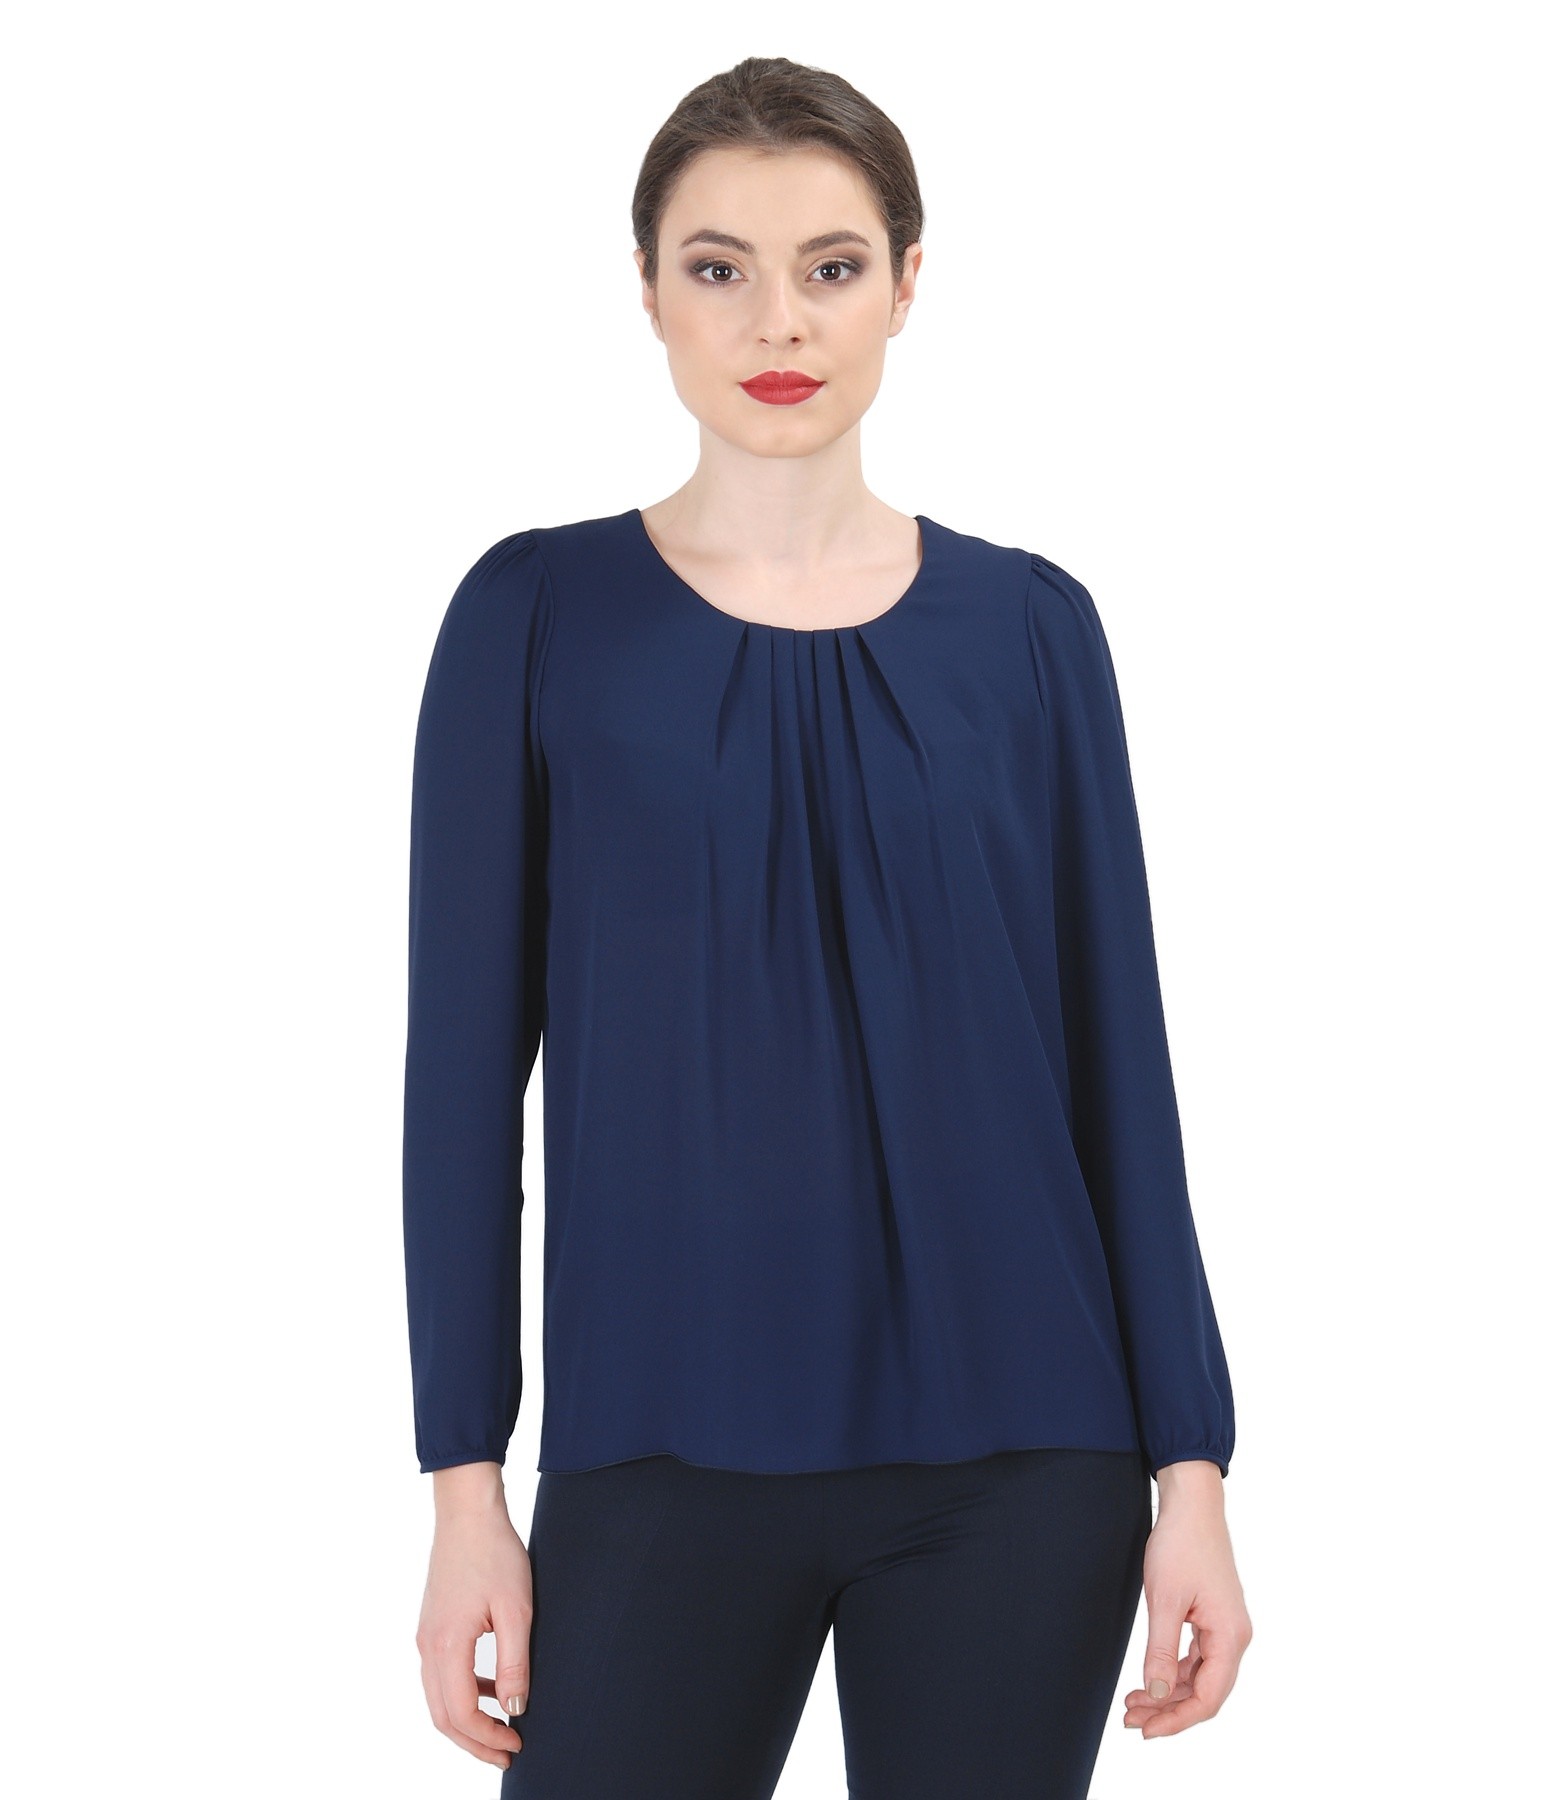 Veil blouse with folds dark blue - YOKKO